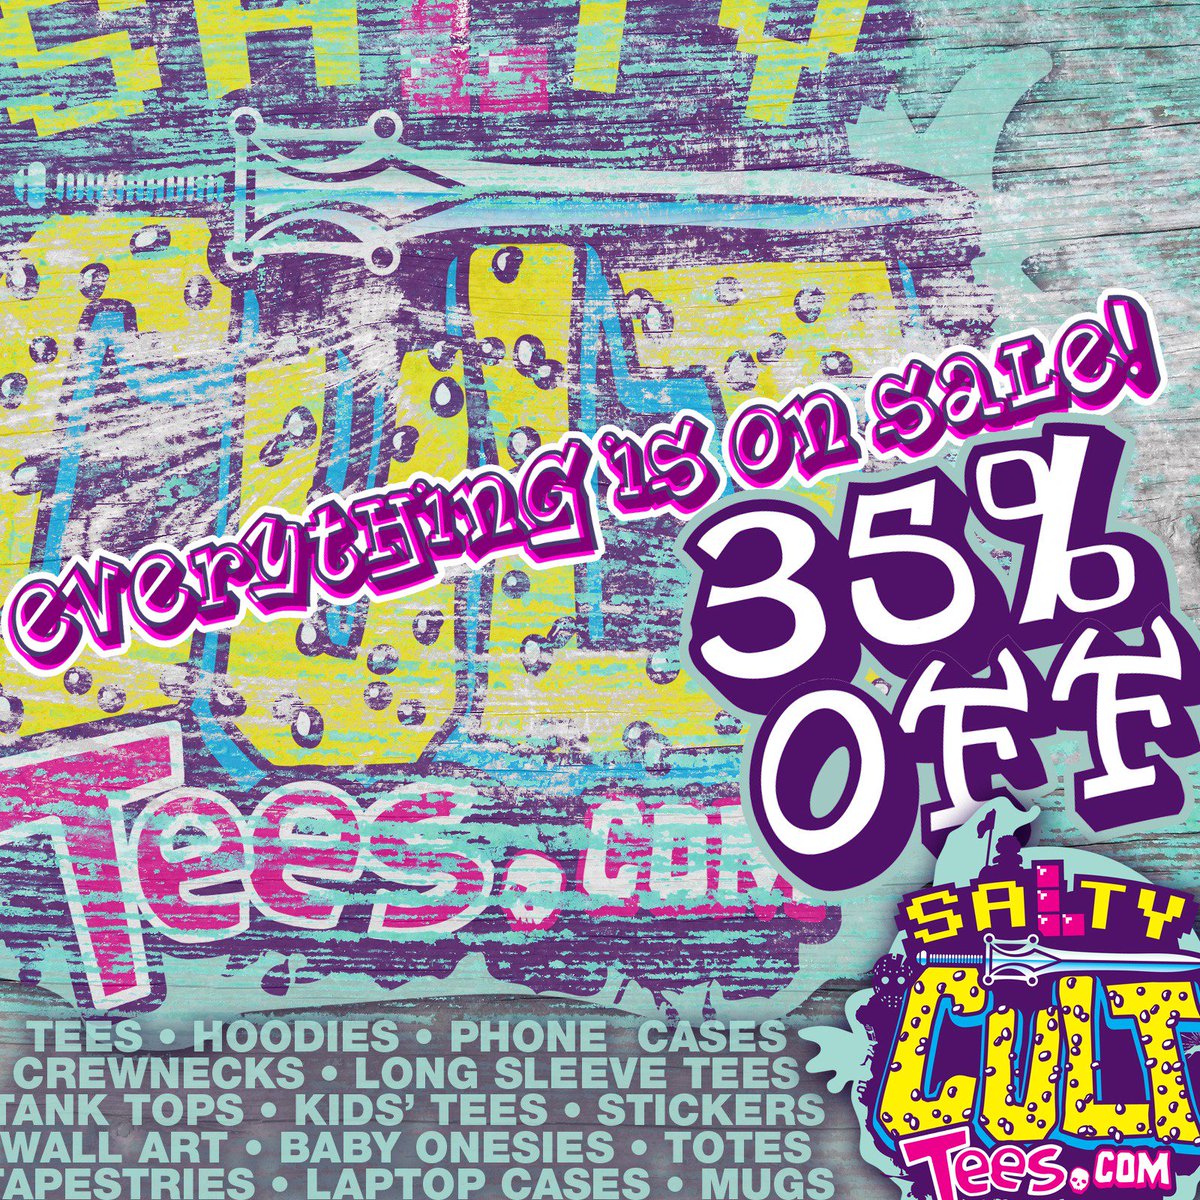 We're on sale! #SaltyCultTees #tshirts #movies #noveltyshirts
teepublic.com/user/saltycult